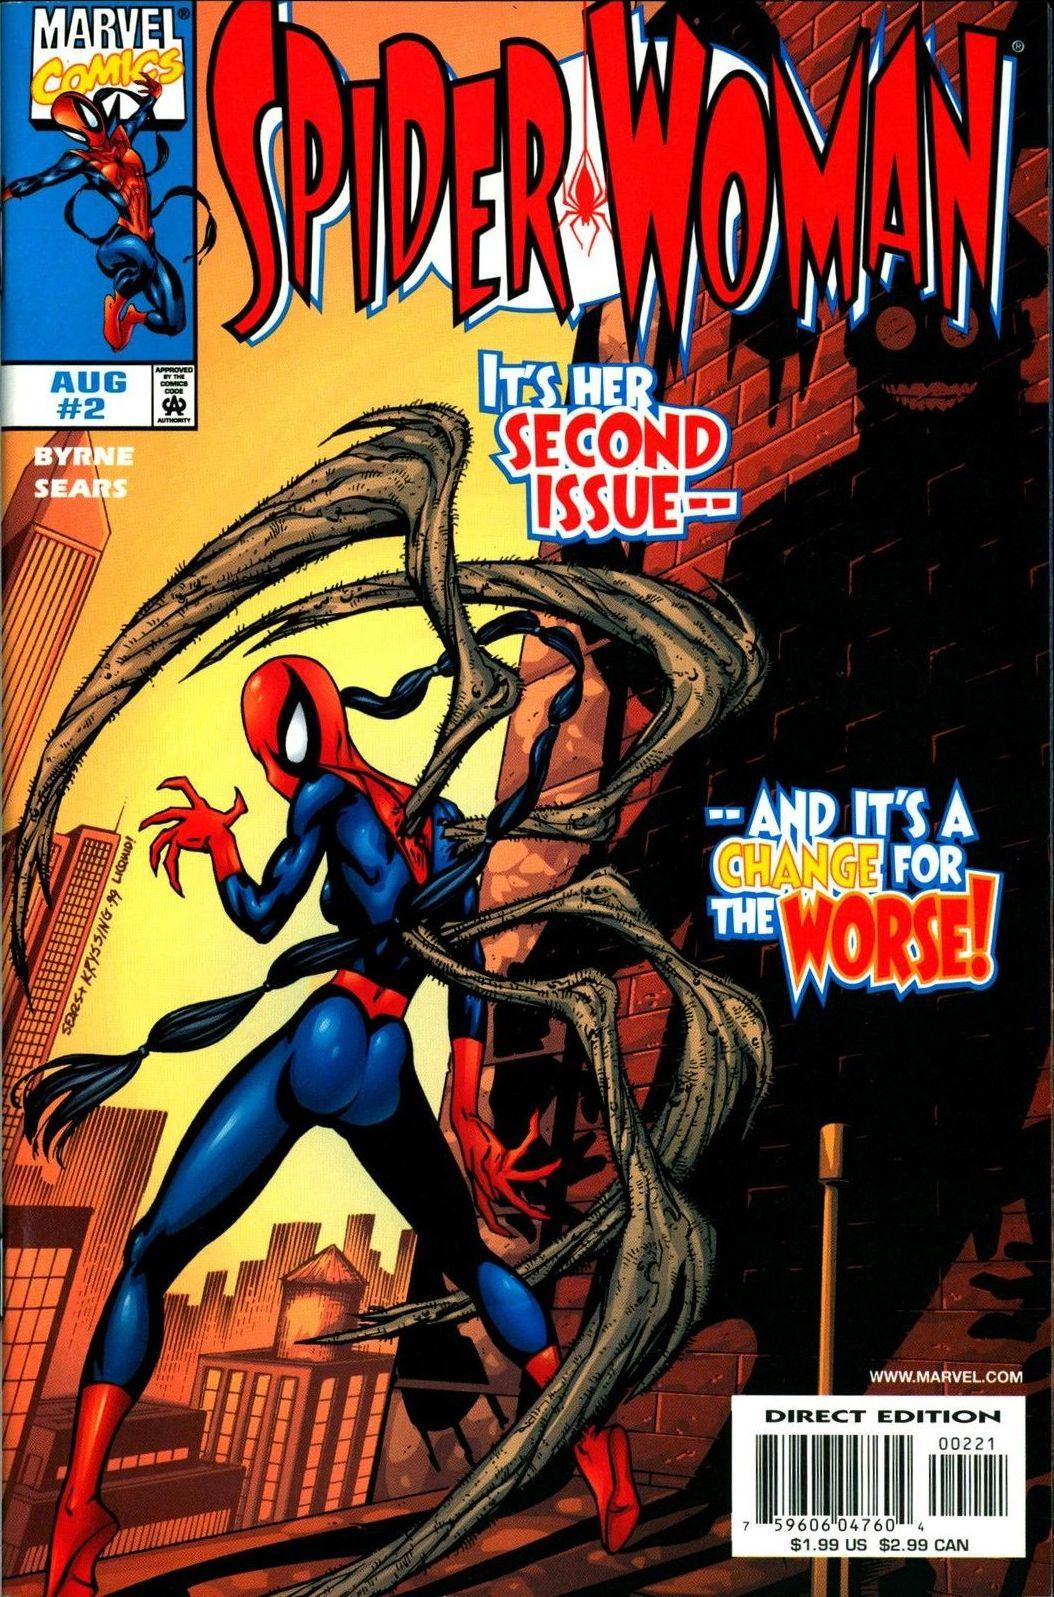 Spider-Woman Vol. 3 #2